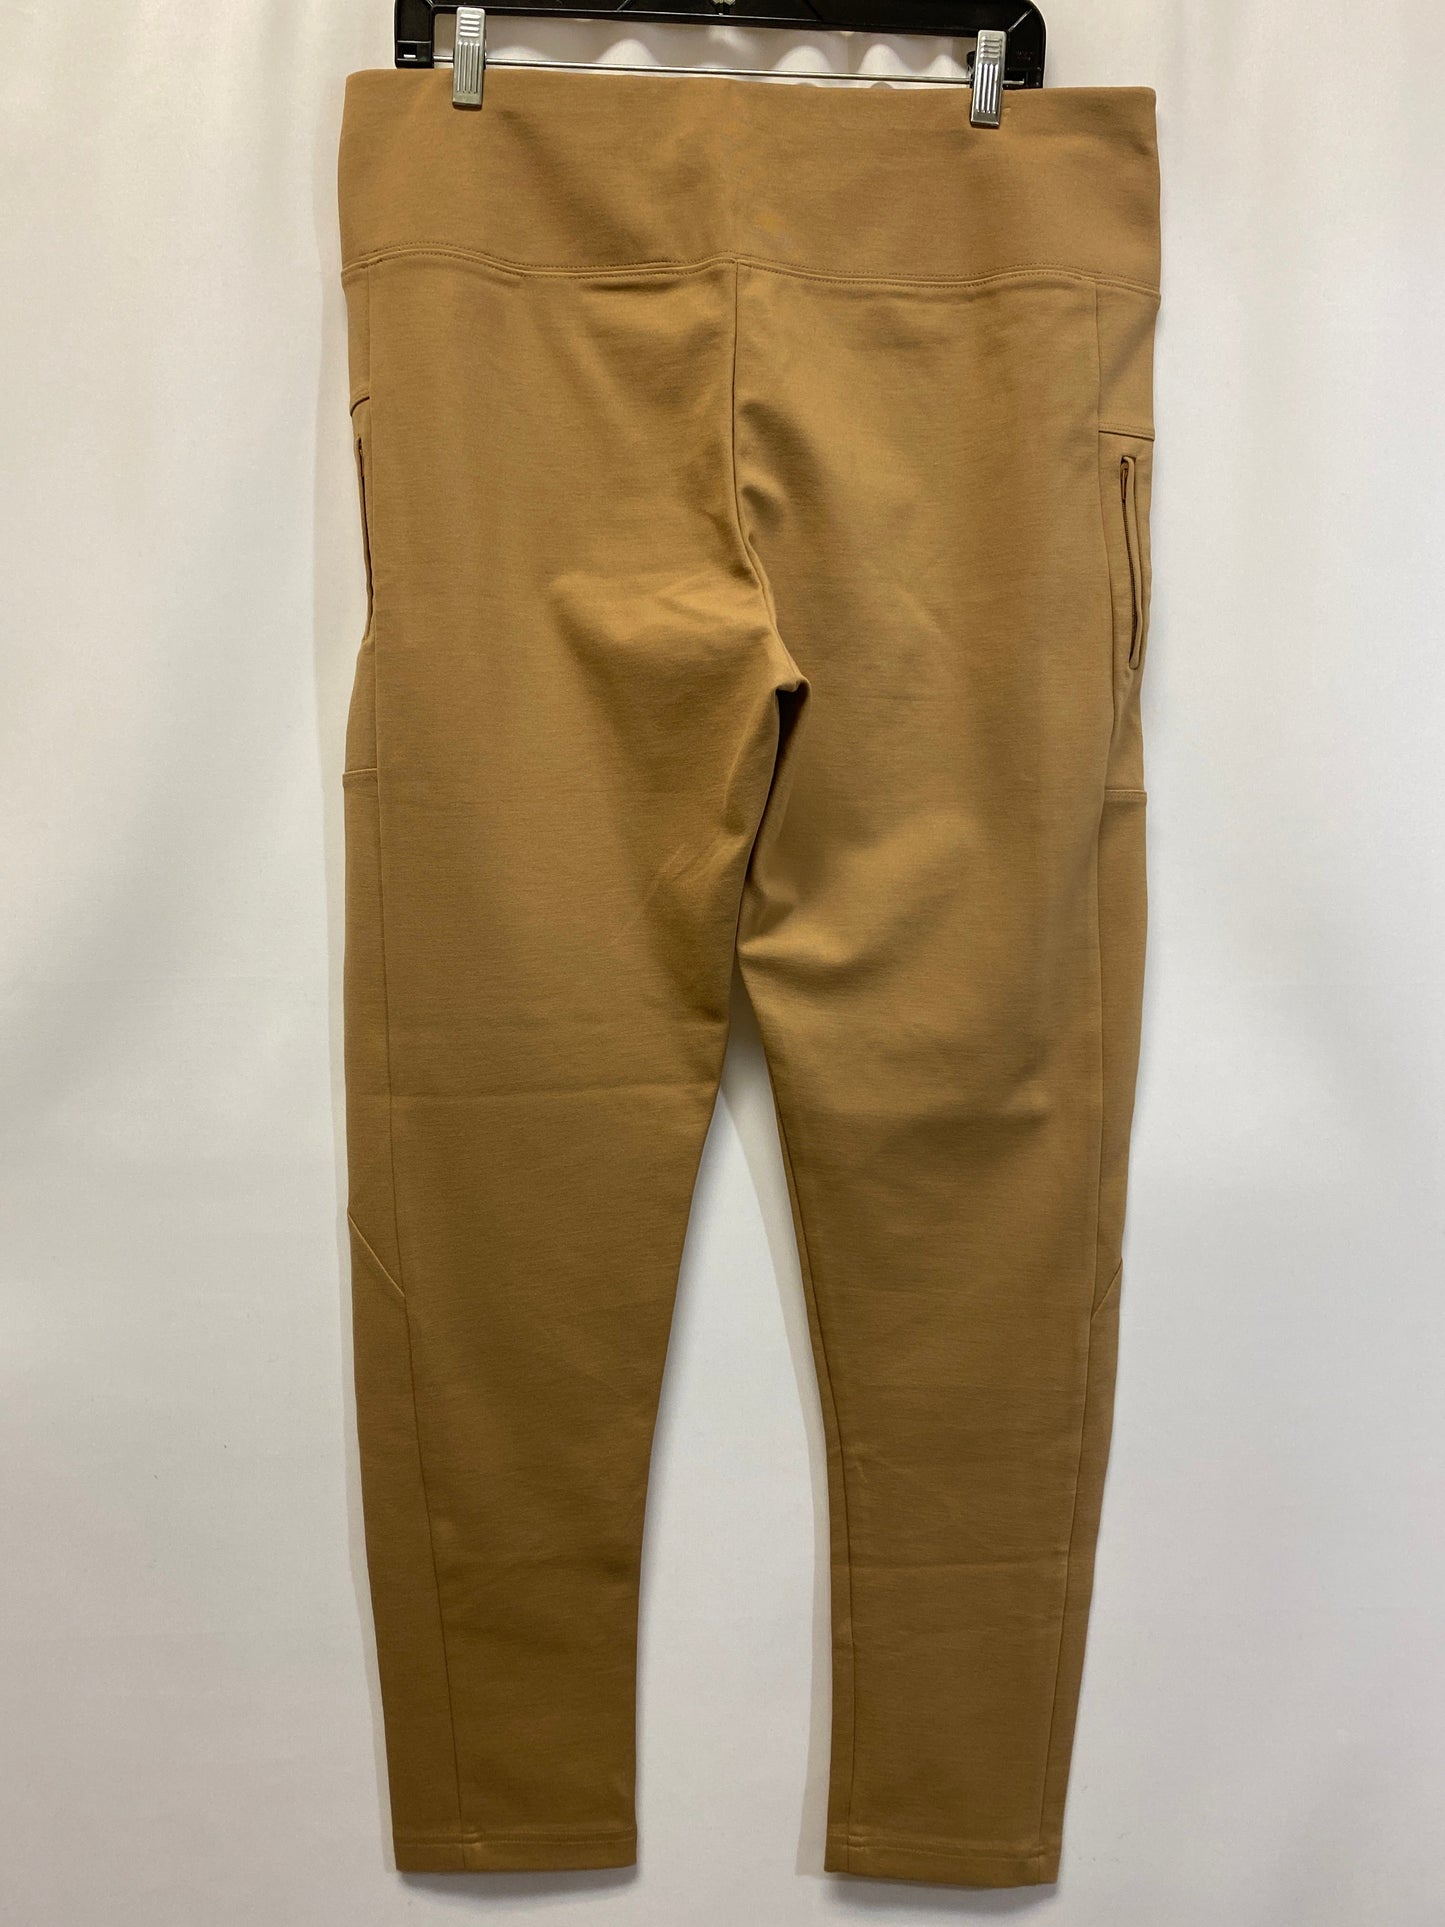 Brown Pants Other Banana Republic, Size Xl